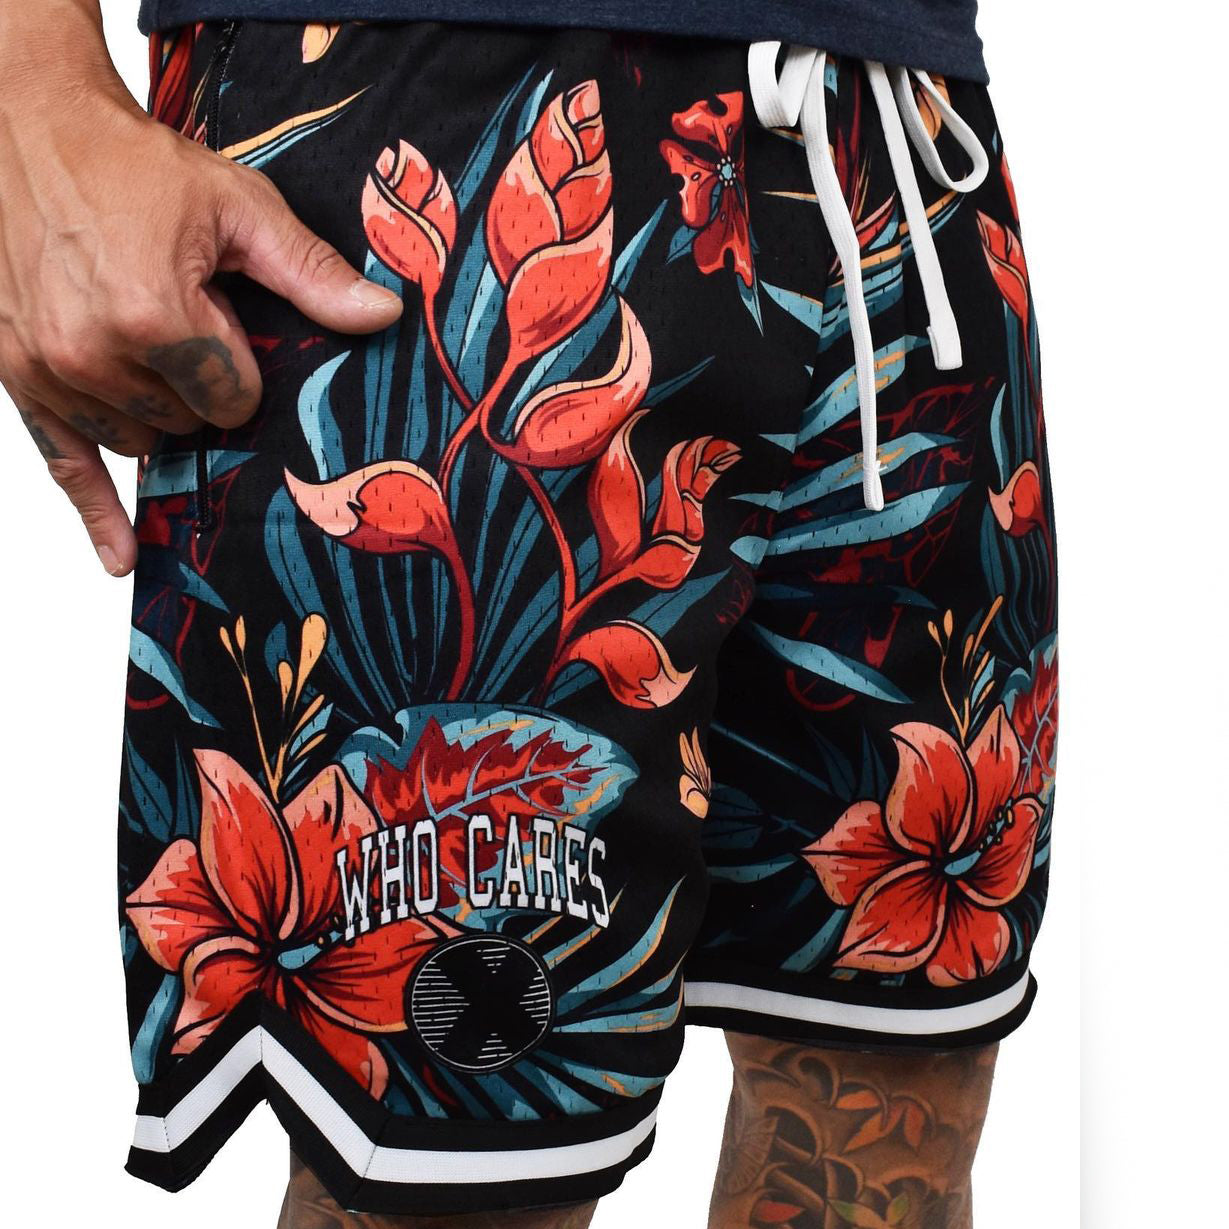 Floral-print casual street mesh shorts